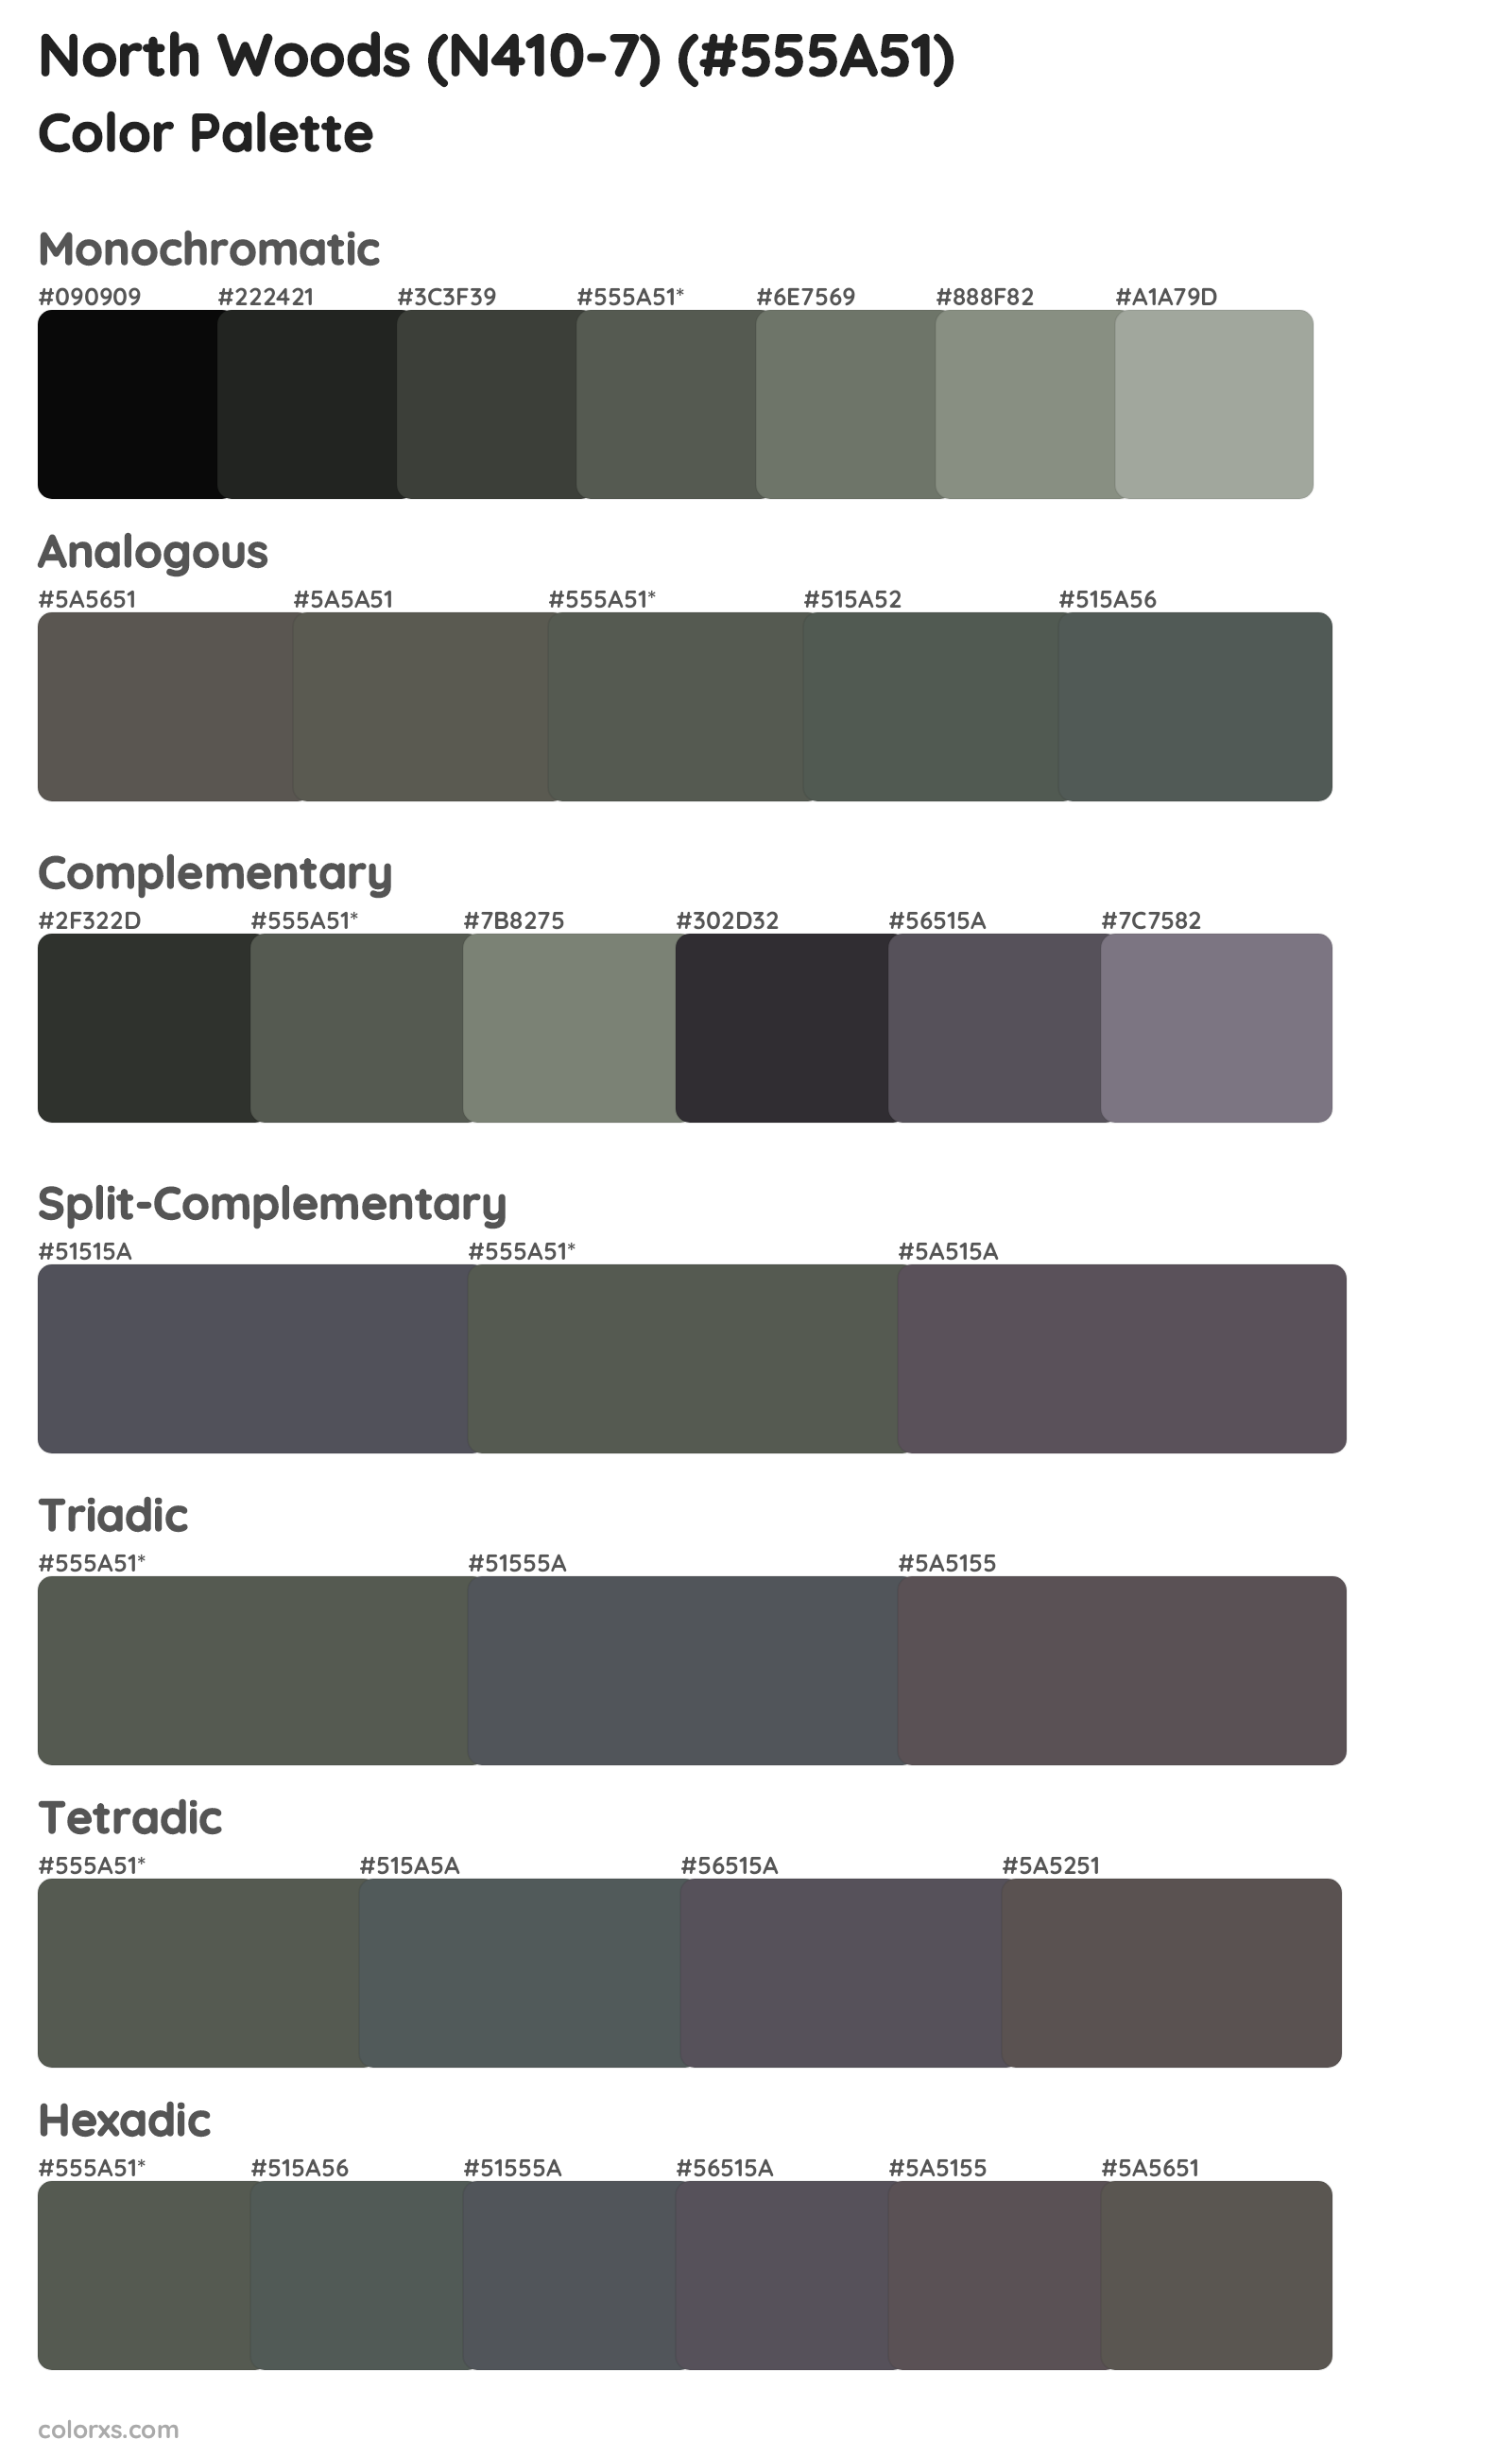 North Woods (N410-7) Color Scheme Palettes